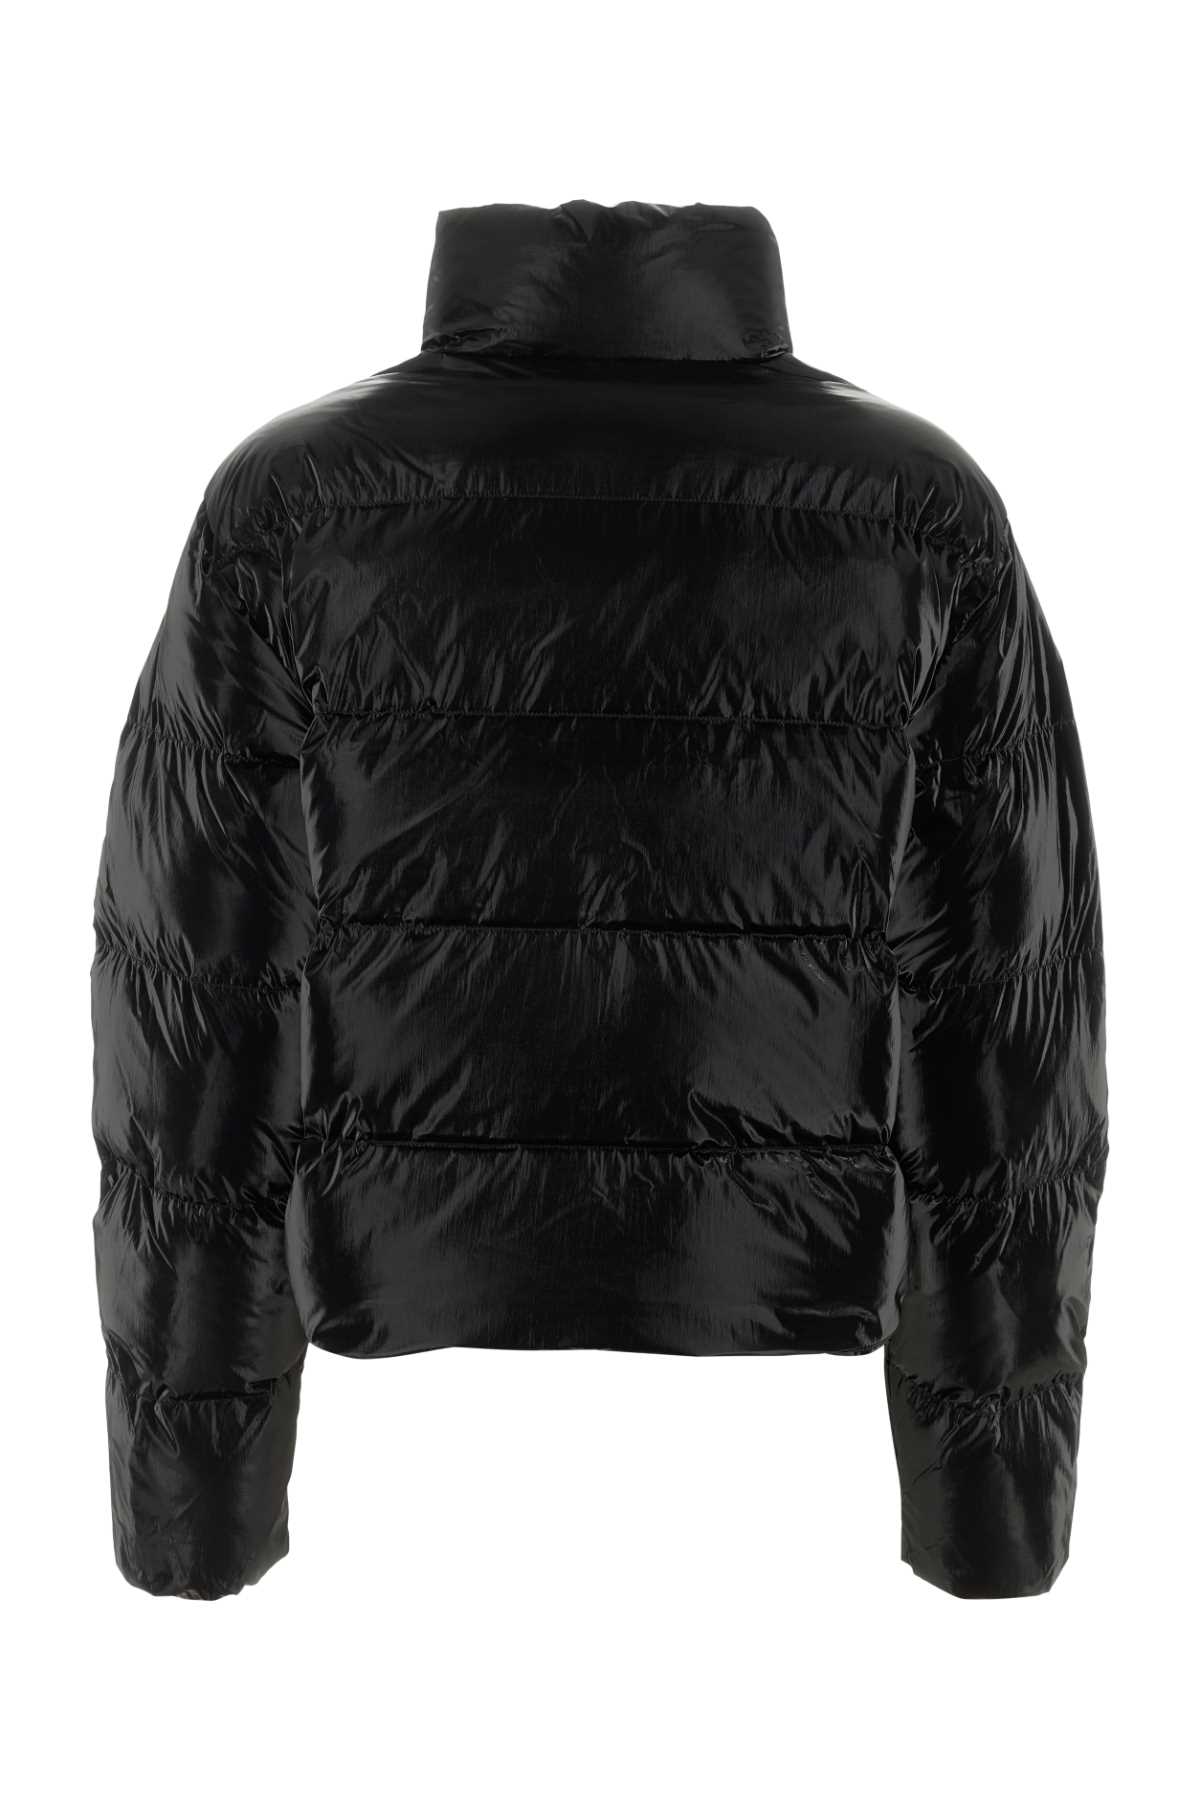 Alyx Black Nylon Padded Jacket